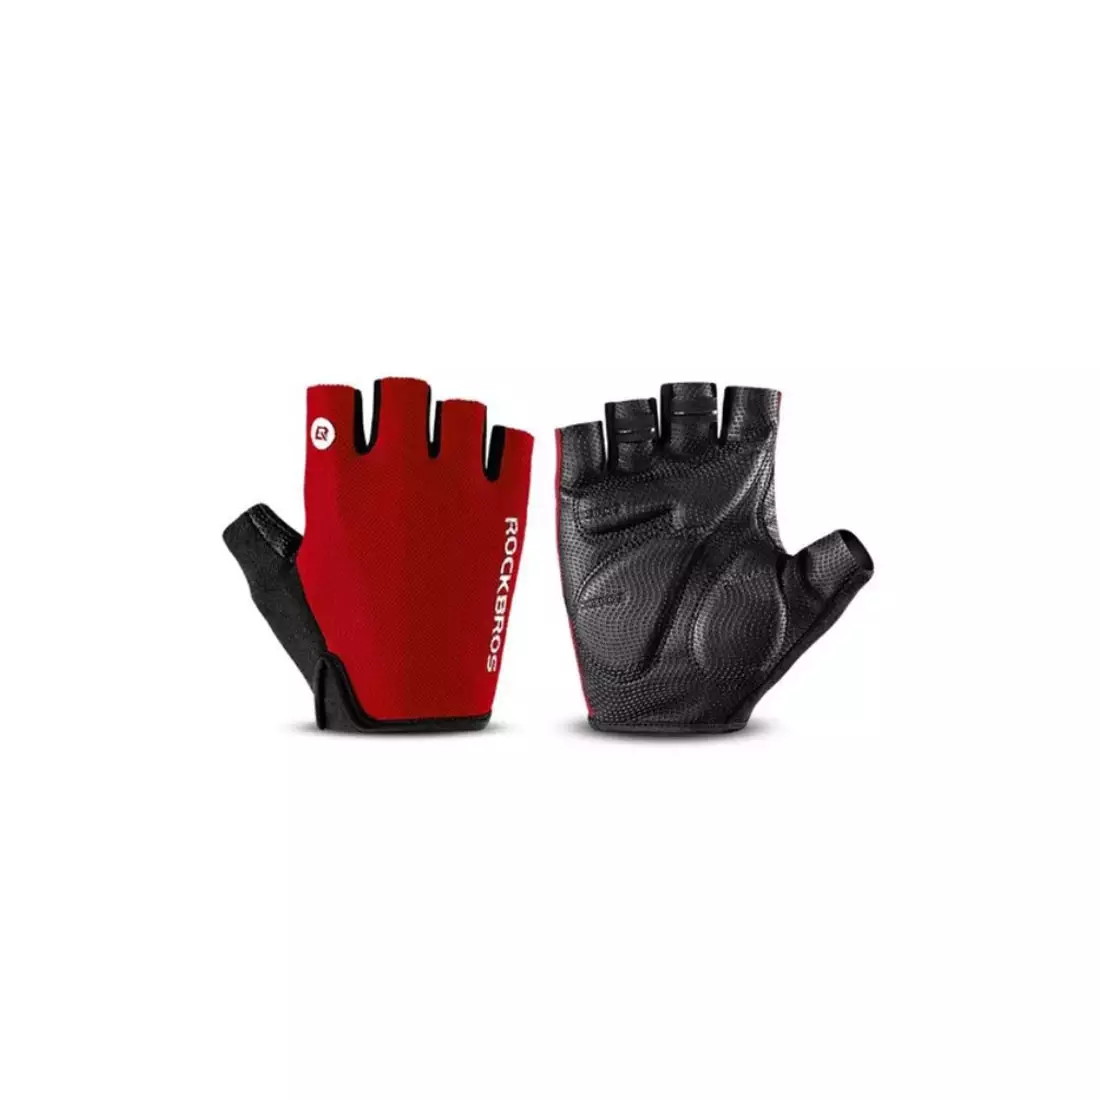 Rockbros mănuși de ciclism deget scurt, negru-roșu S106R